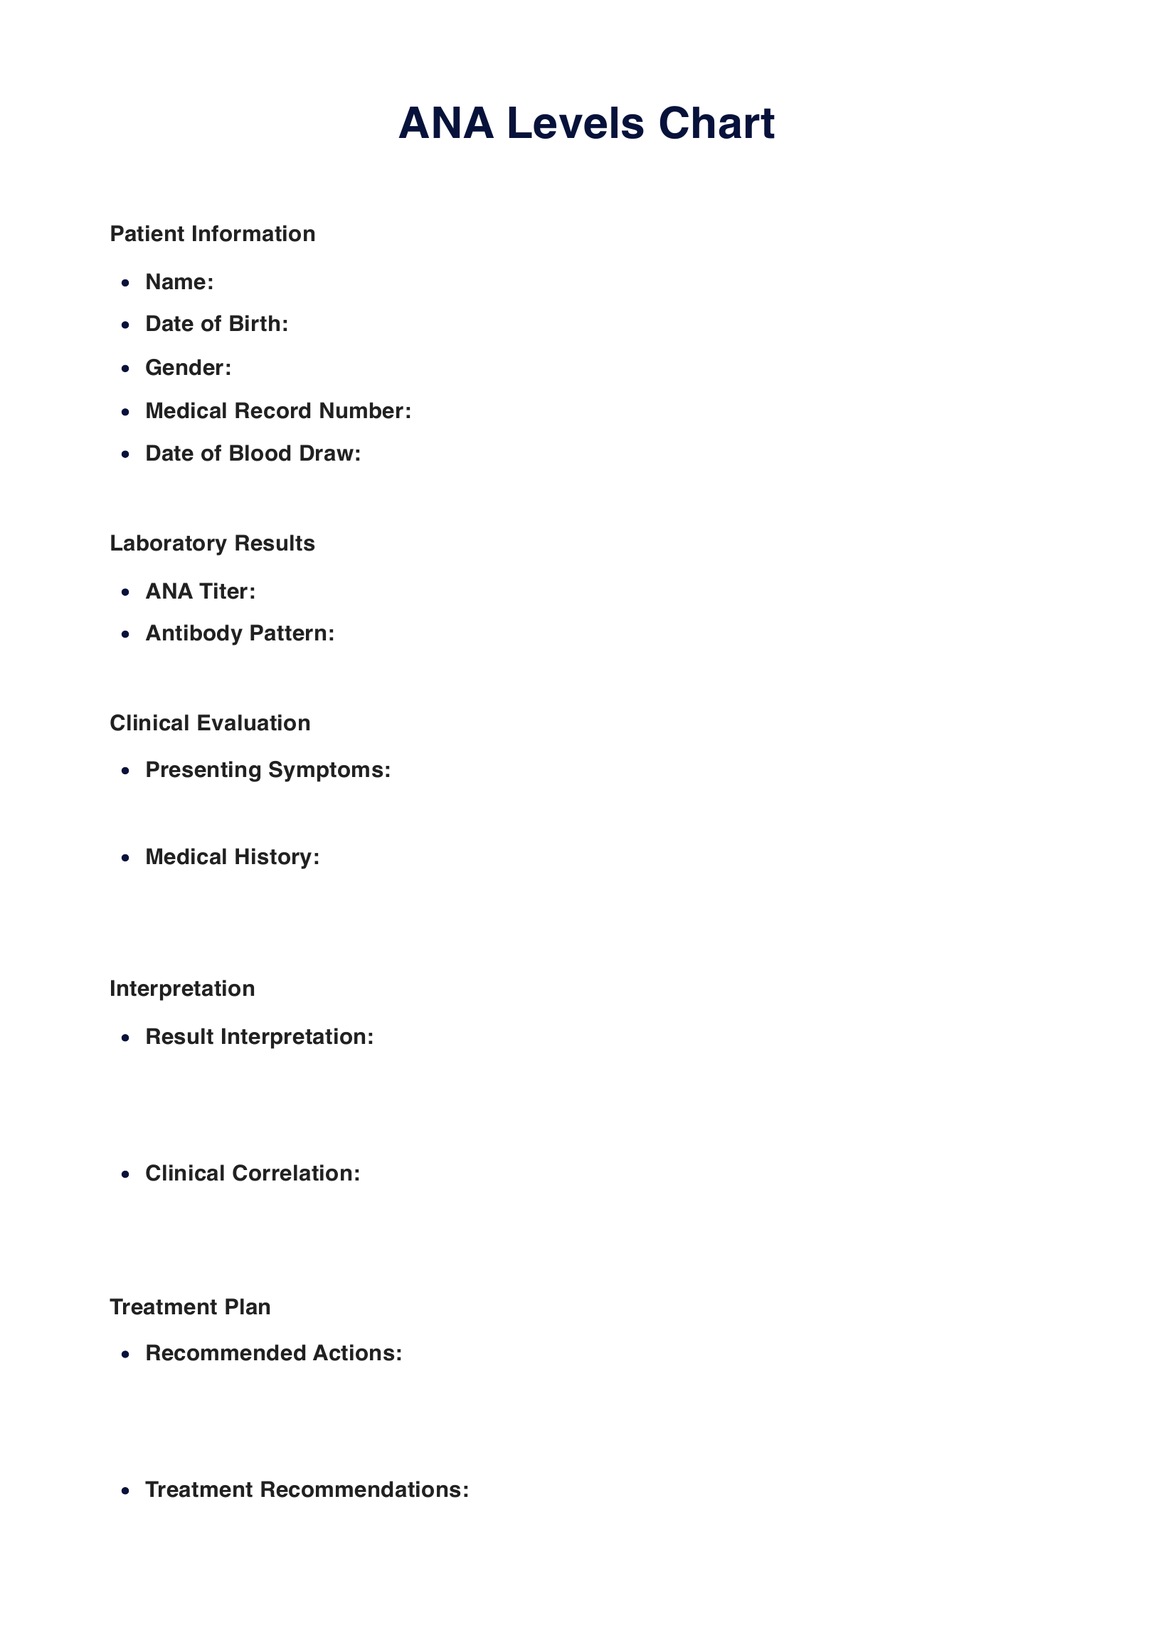 ANA Levels Chart PDF Example